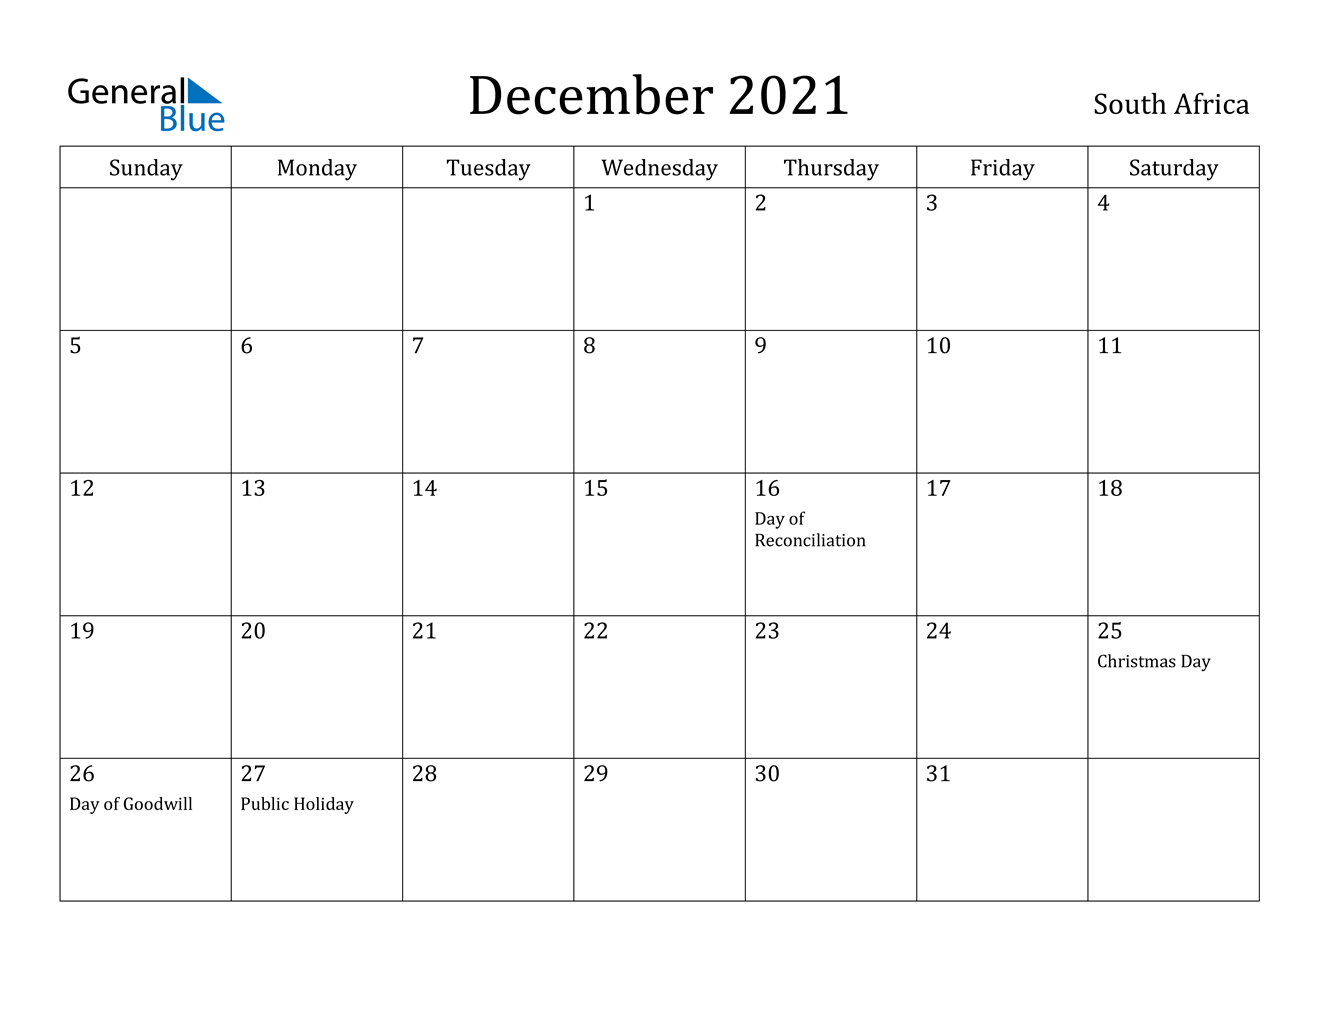 Get April 2022 Calendar With Holidays South Africa